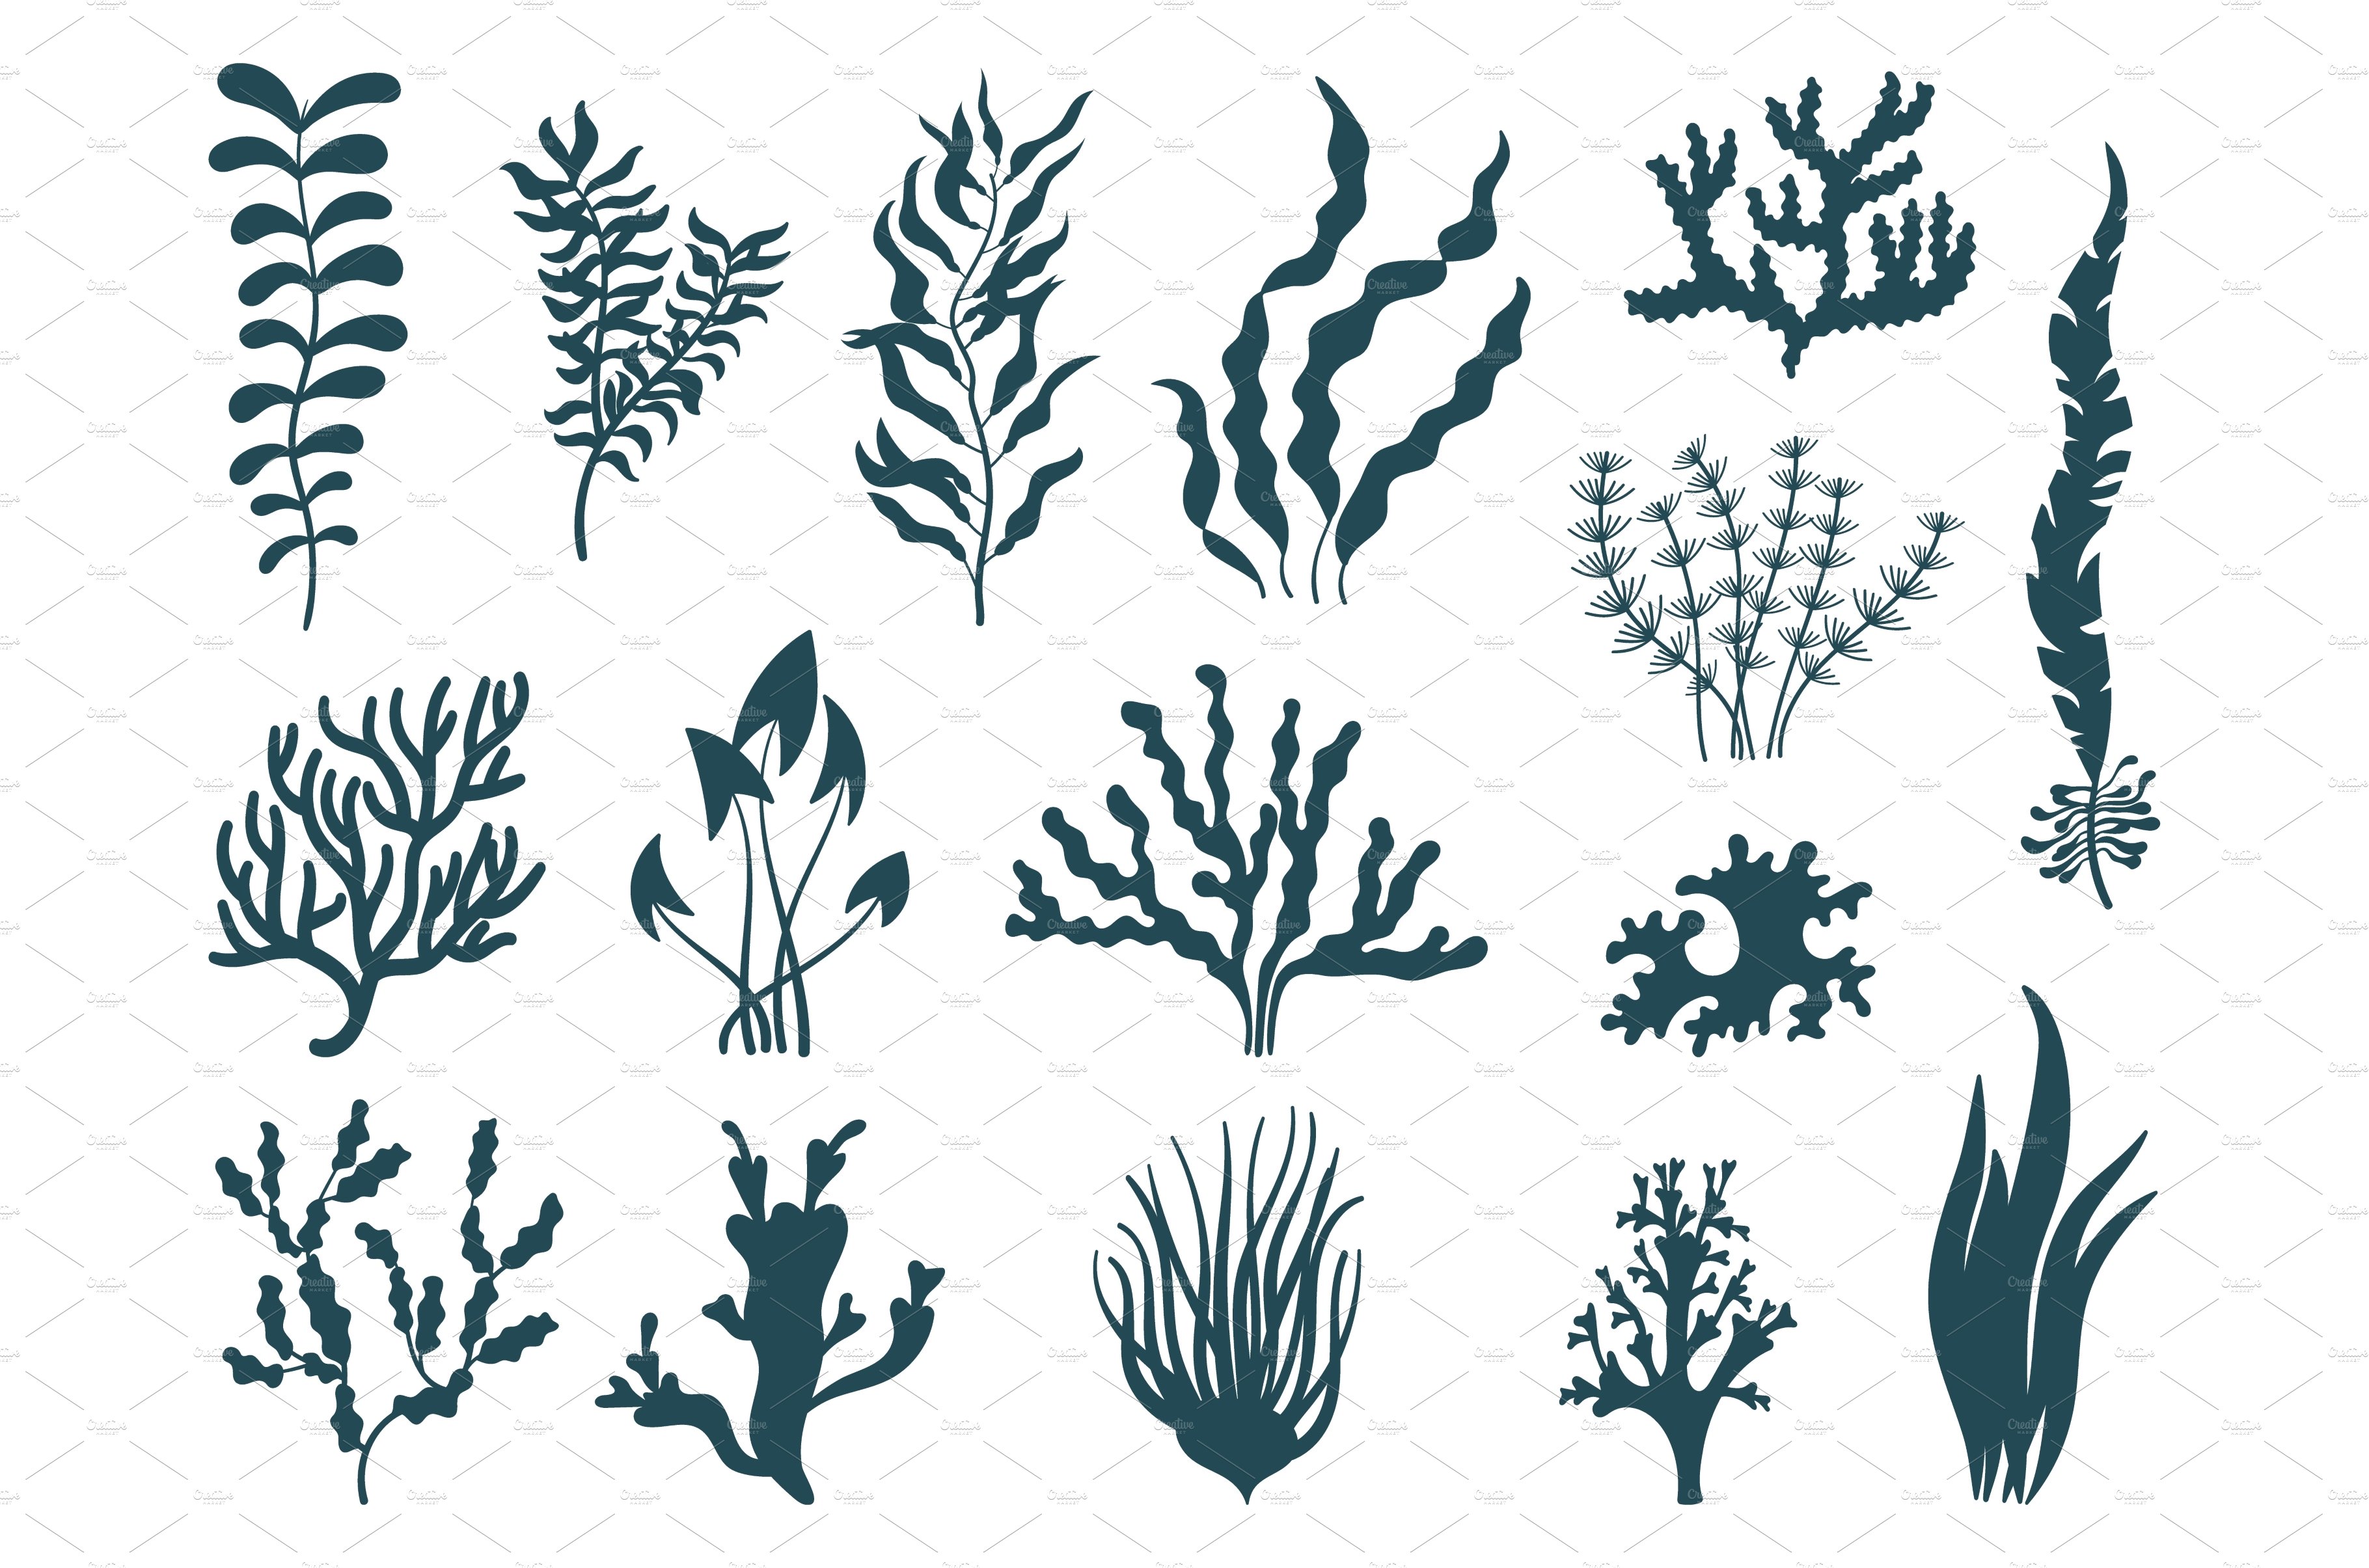 Sea plants silhouettes. Seaweed cover image.